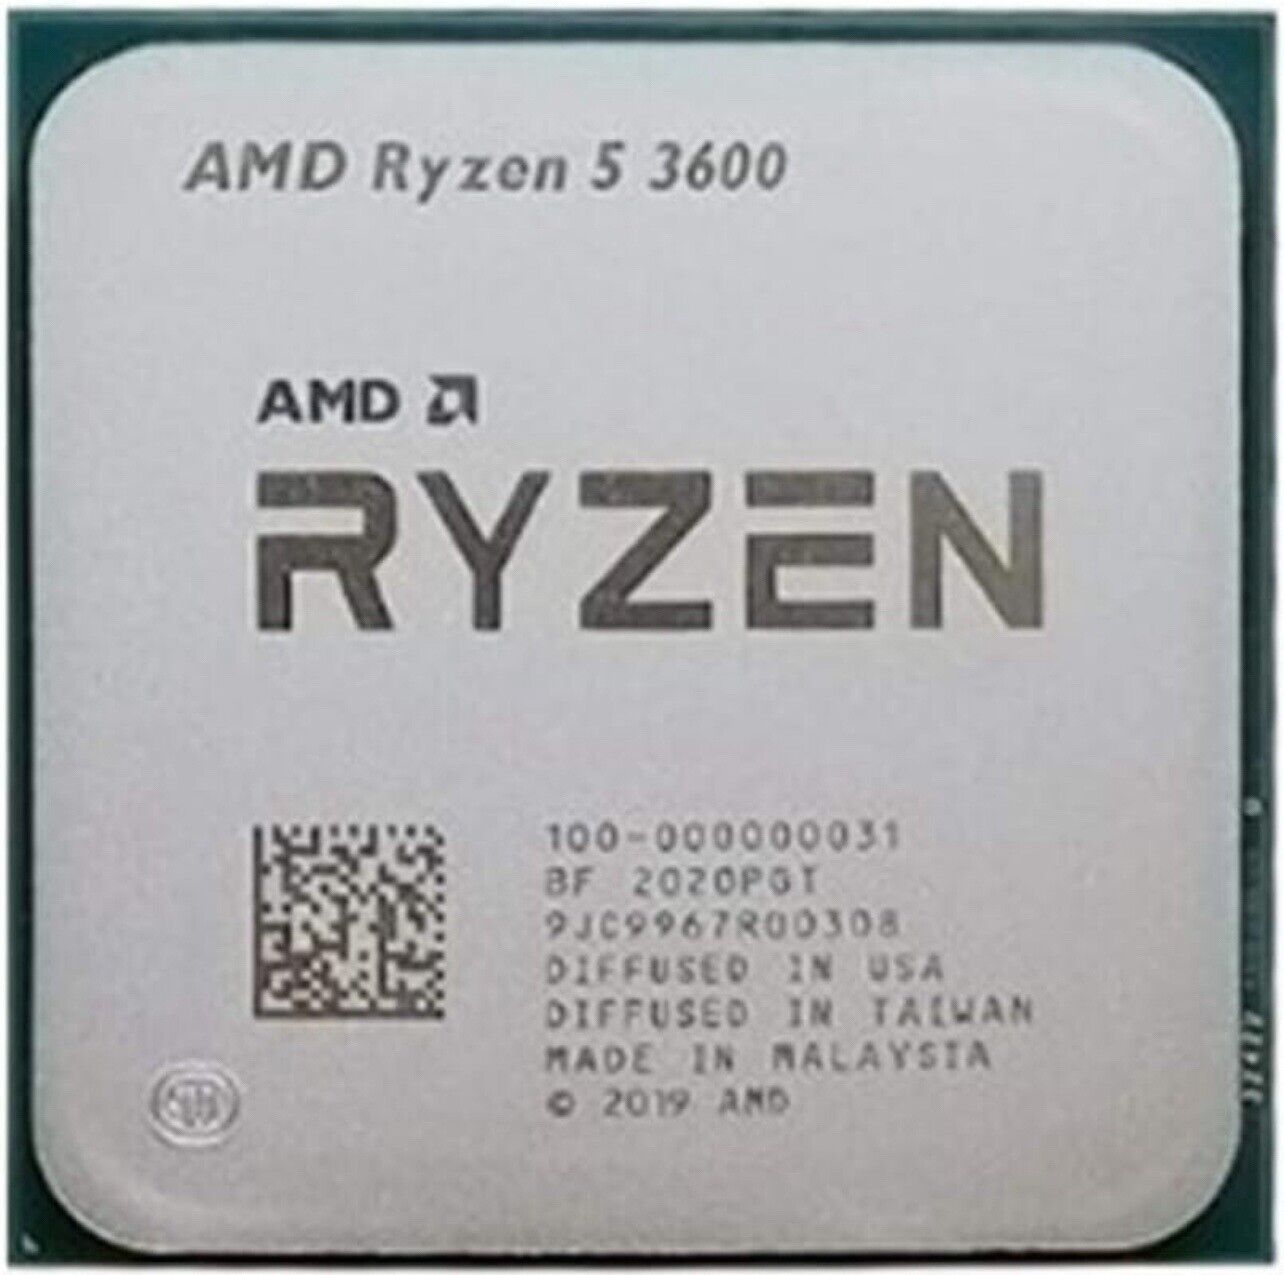 AMD Ryzen 5 3600 Processor (3.6GHz, 6 Cores, Socket AM4) 